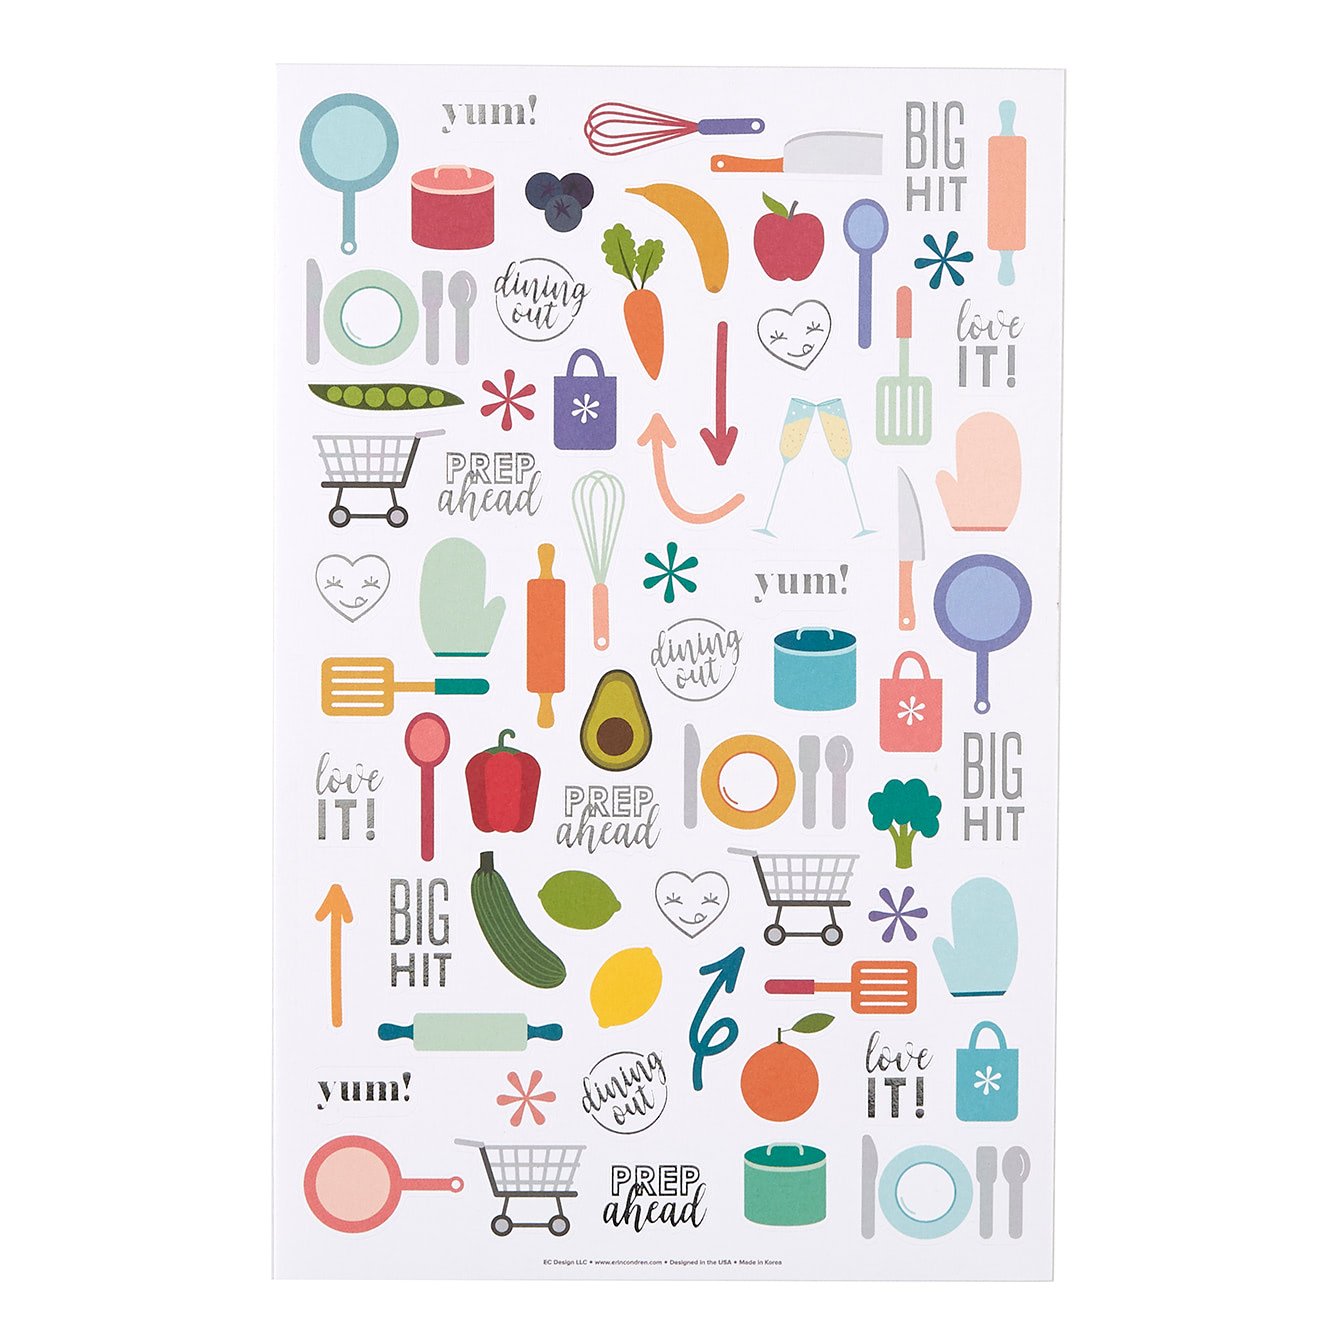 Meal Plan BLDS Dots Mini Stickers – CheerfulPlannerGirl